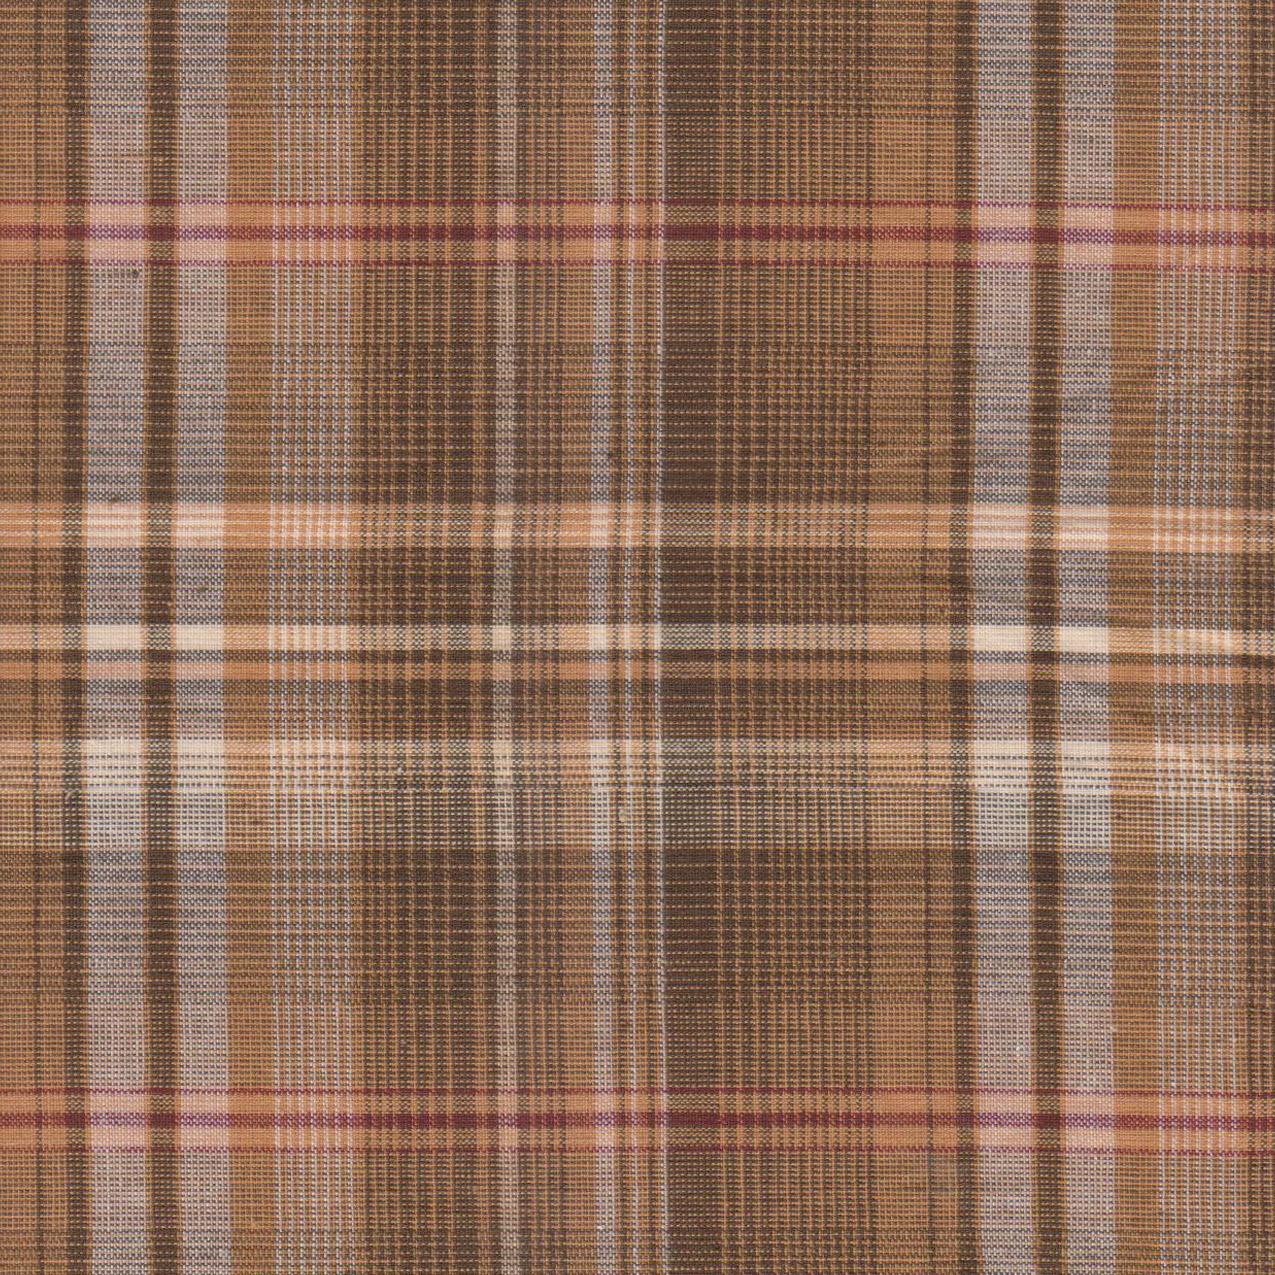 Dark and Light Brown Plaid Fabric Swatch 4" x 4"